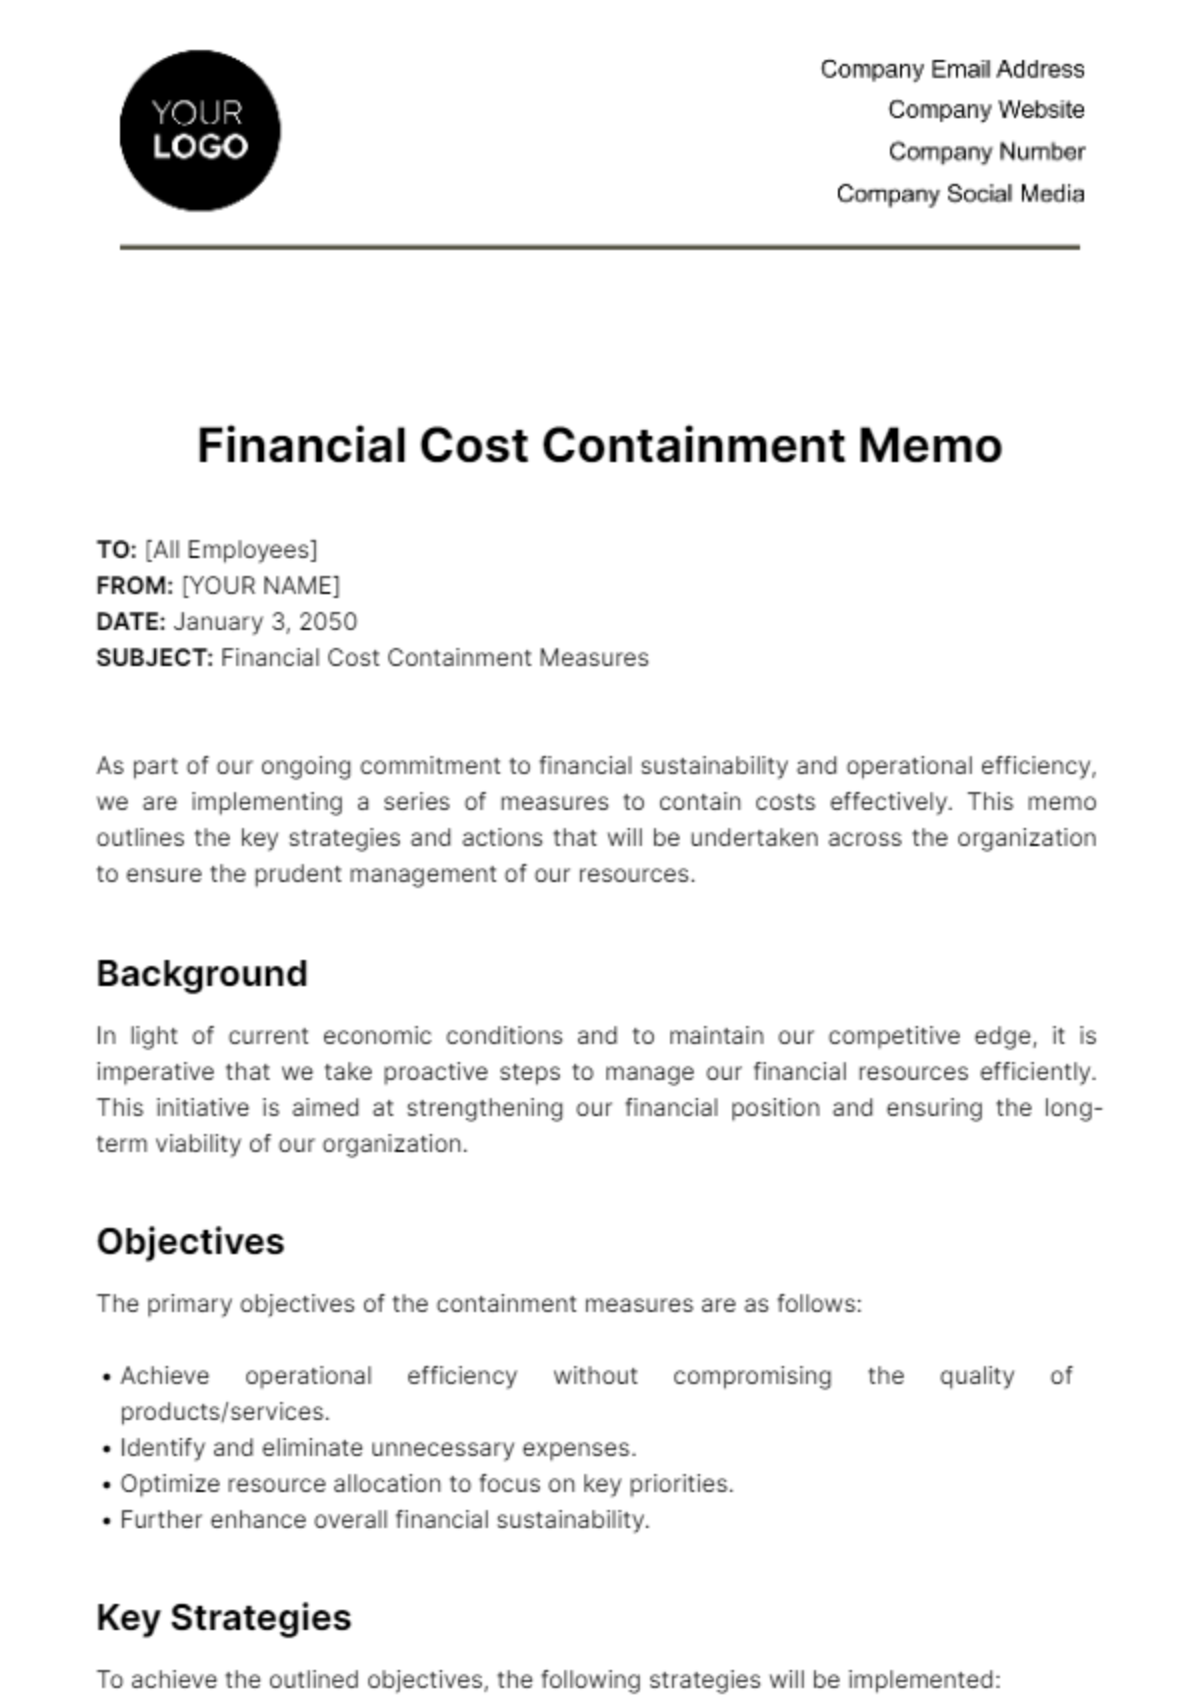 Financial Cost Containment Memo Template